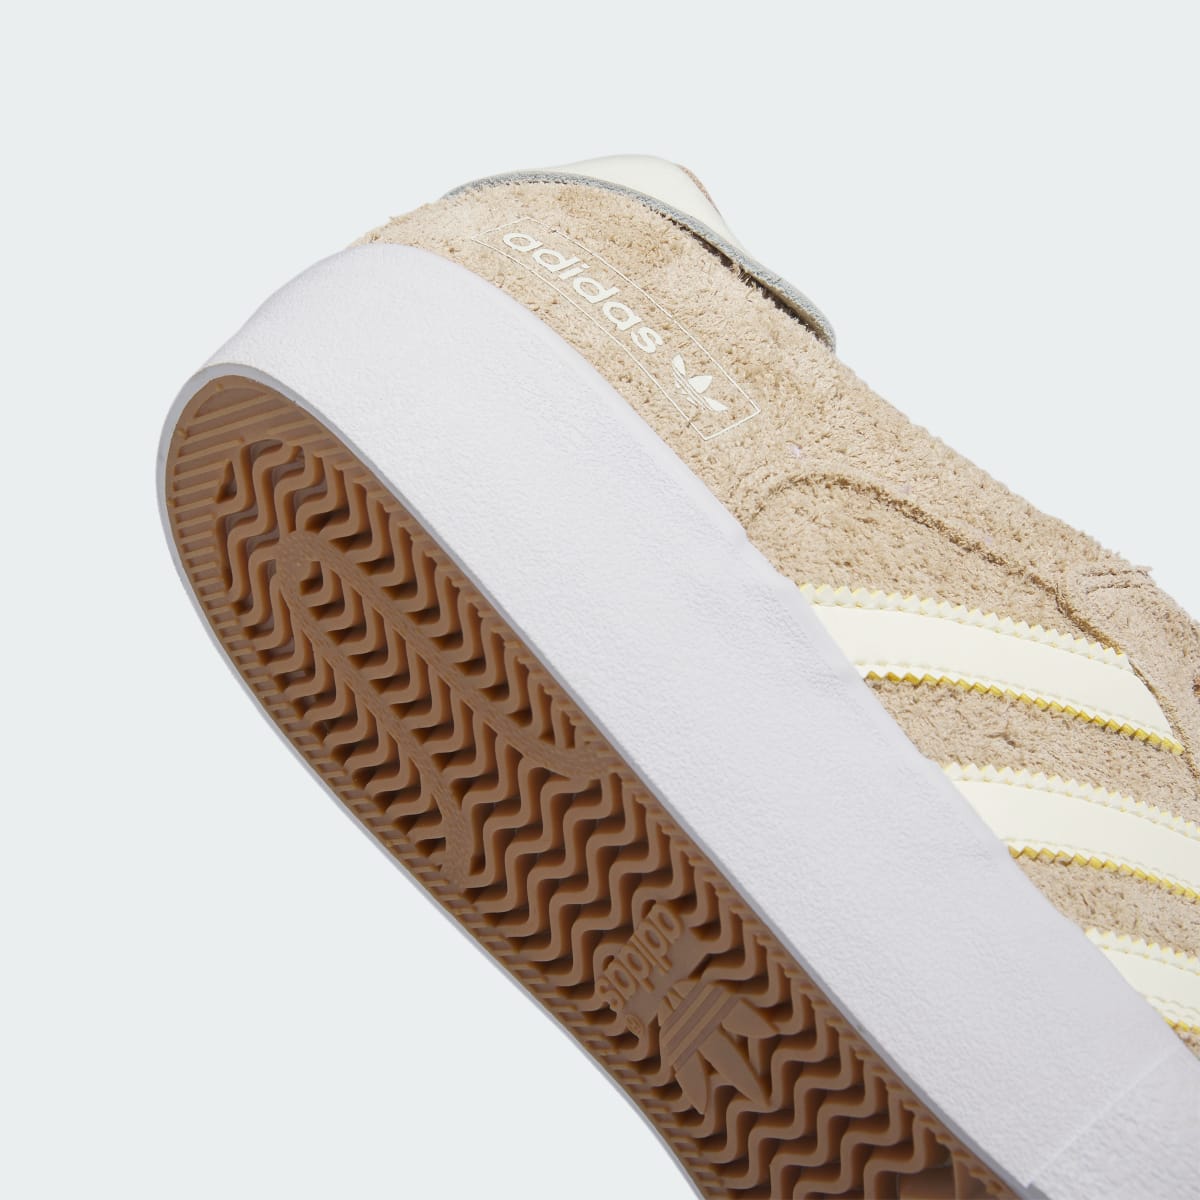 Adidas Matchbreak Super Schuh. 10